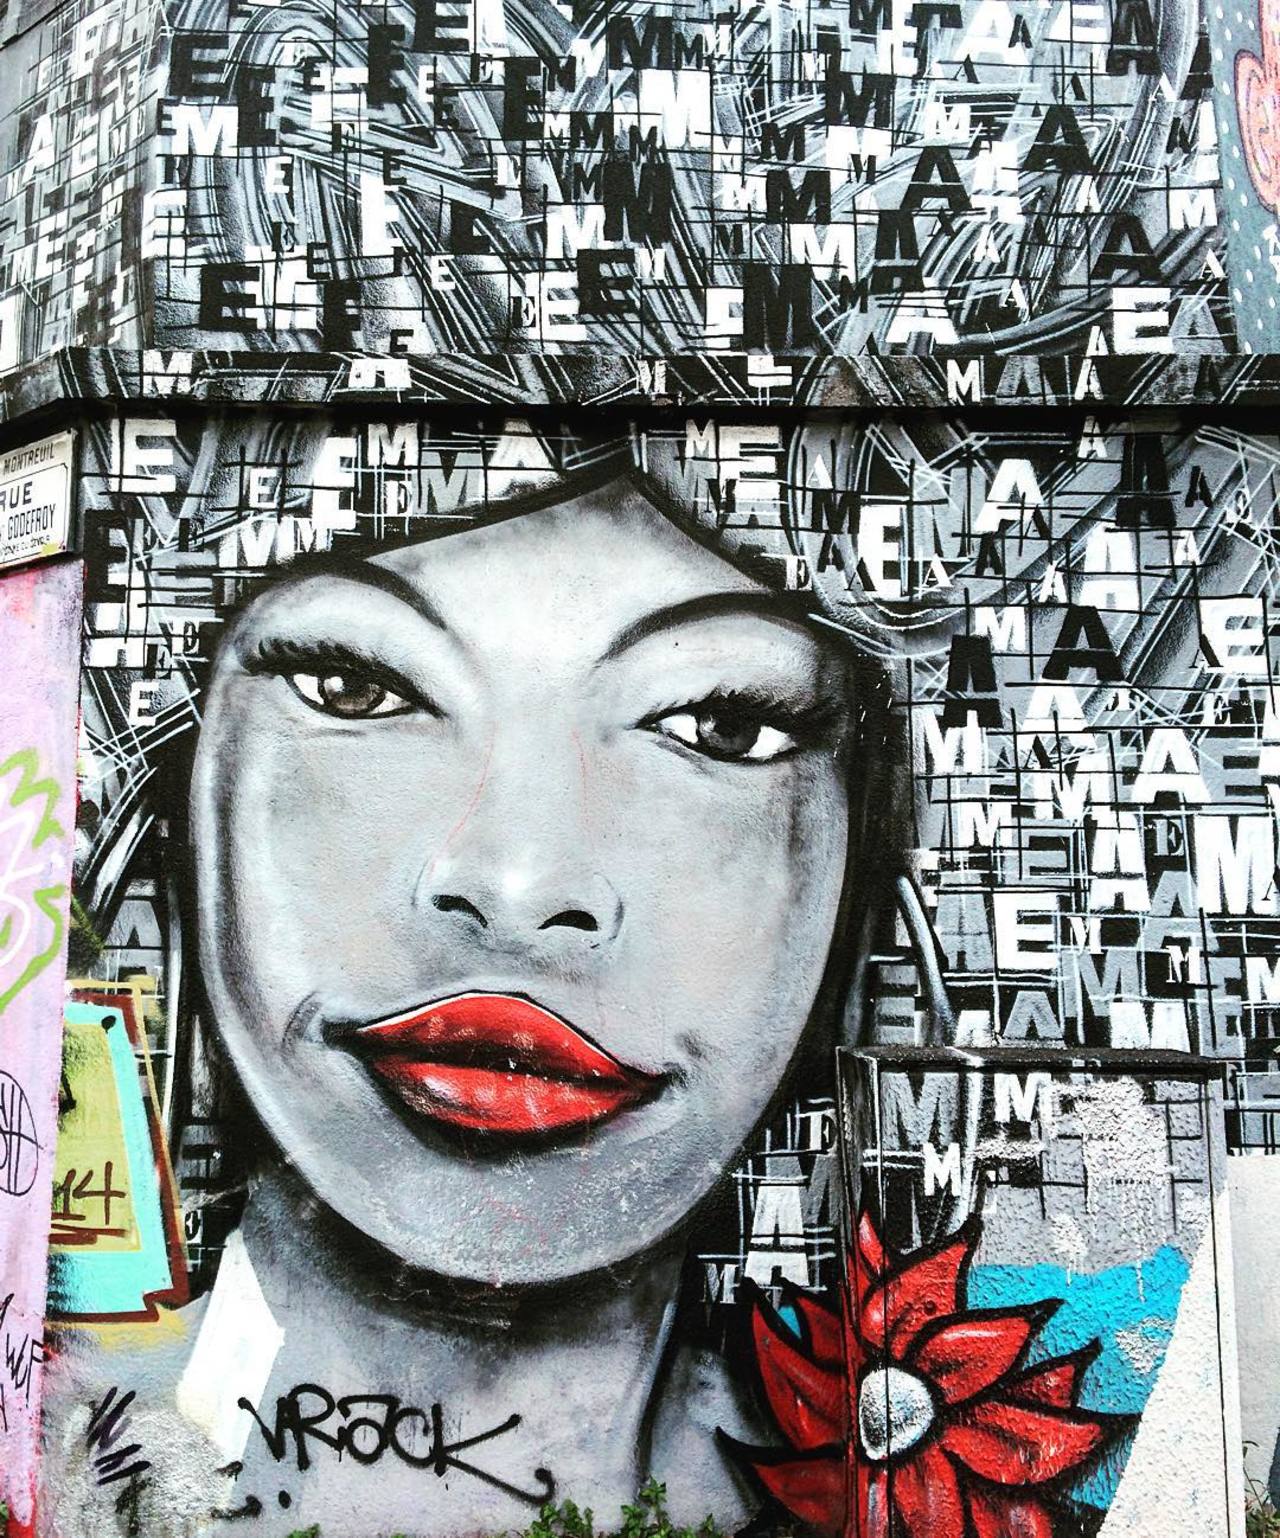 #Paris #graffiti photo by @julosteart http://ift.tt/1Ov6Veb #StreetArt http://t.co/mgUuW0XdjG